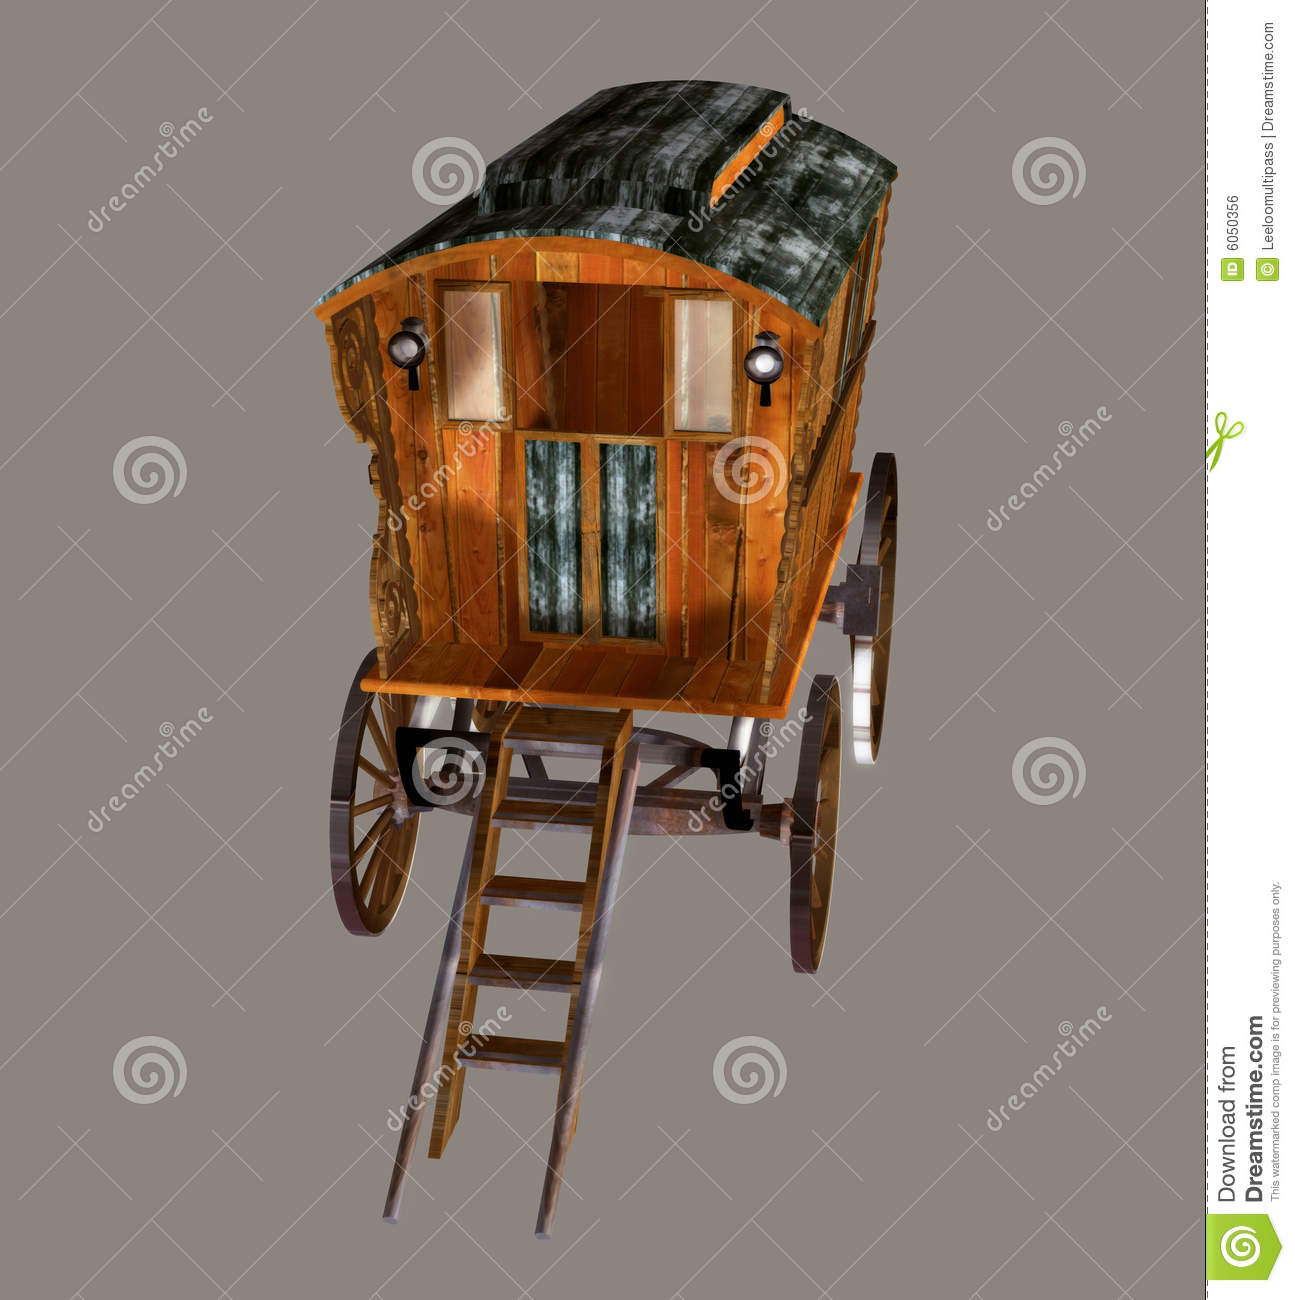 Gypsy Wagon Royalty Free Stock Image   Image  6050356